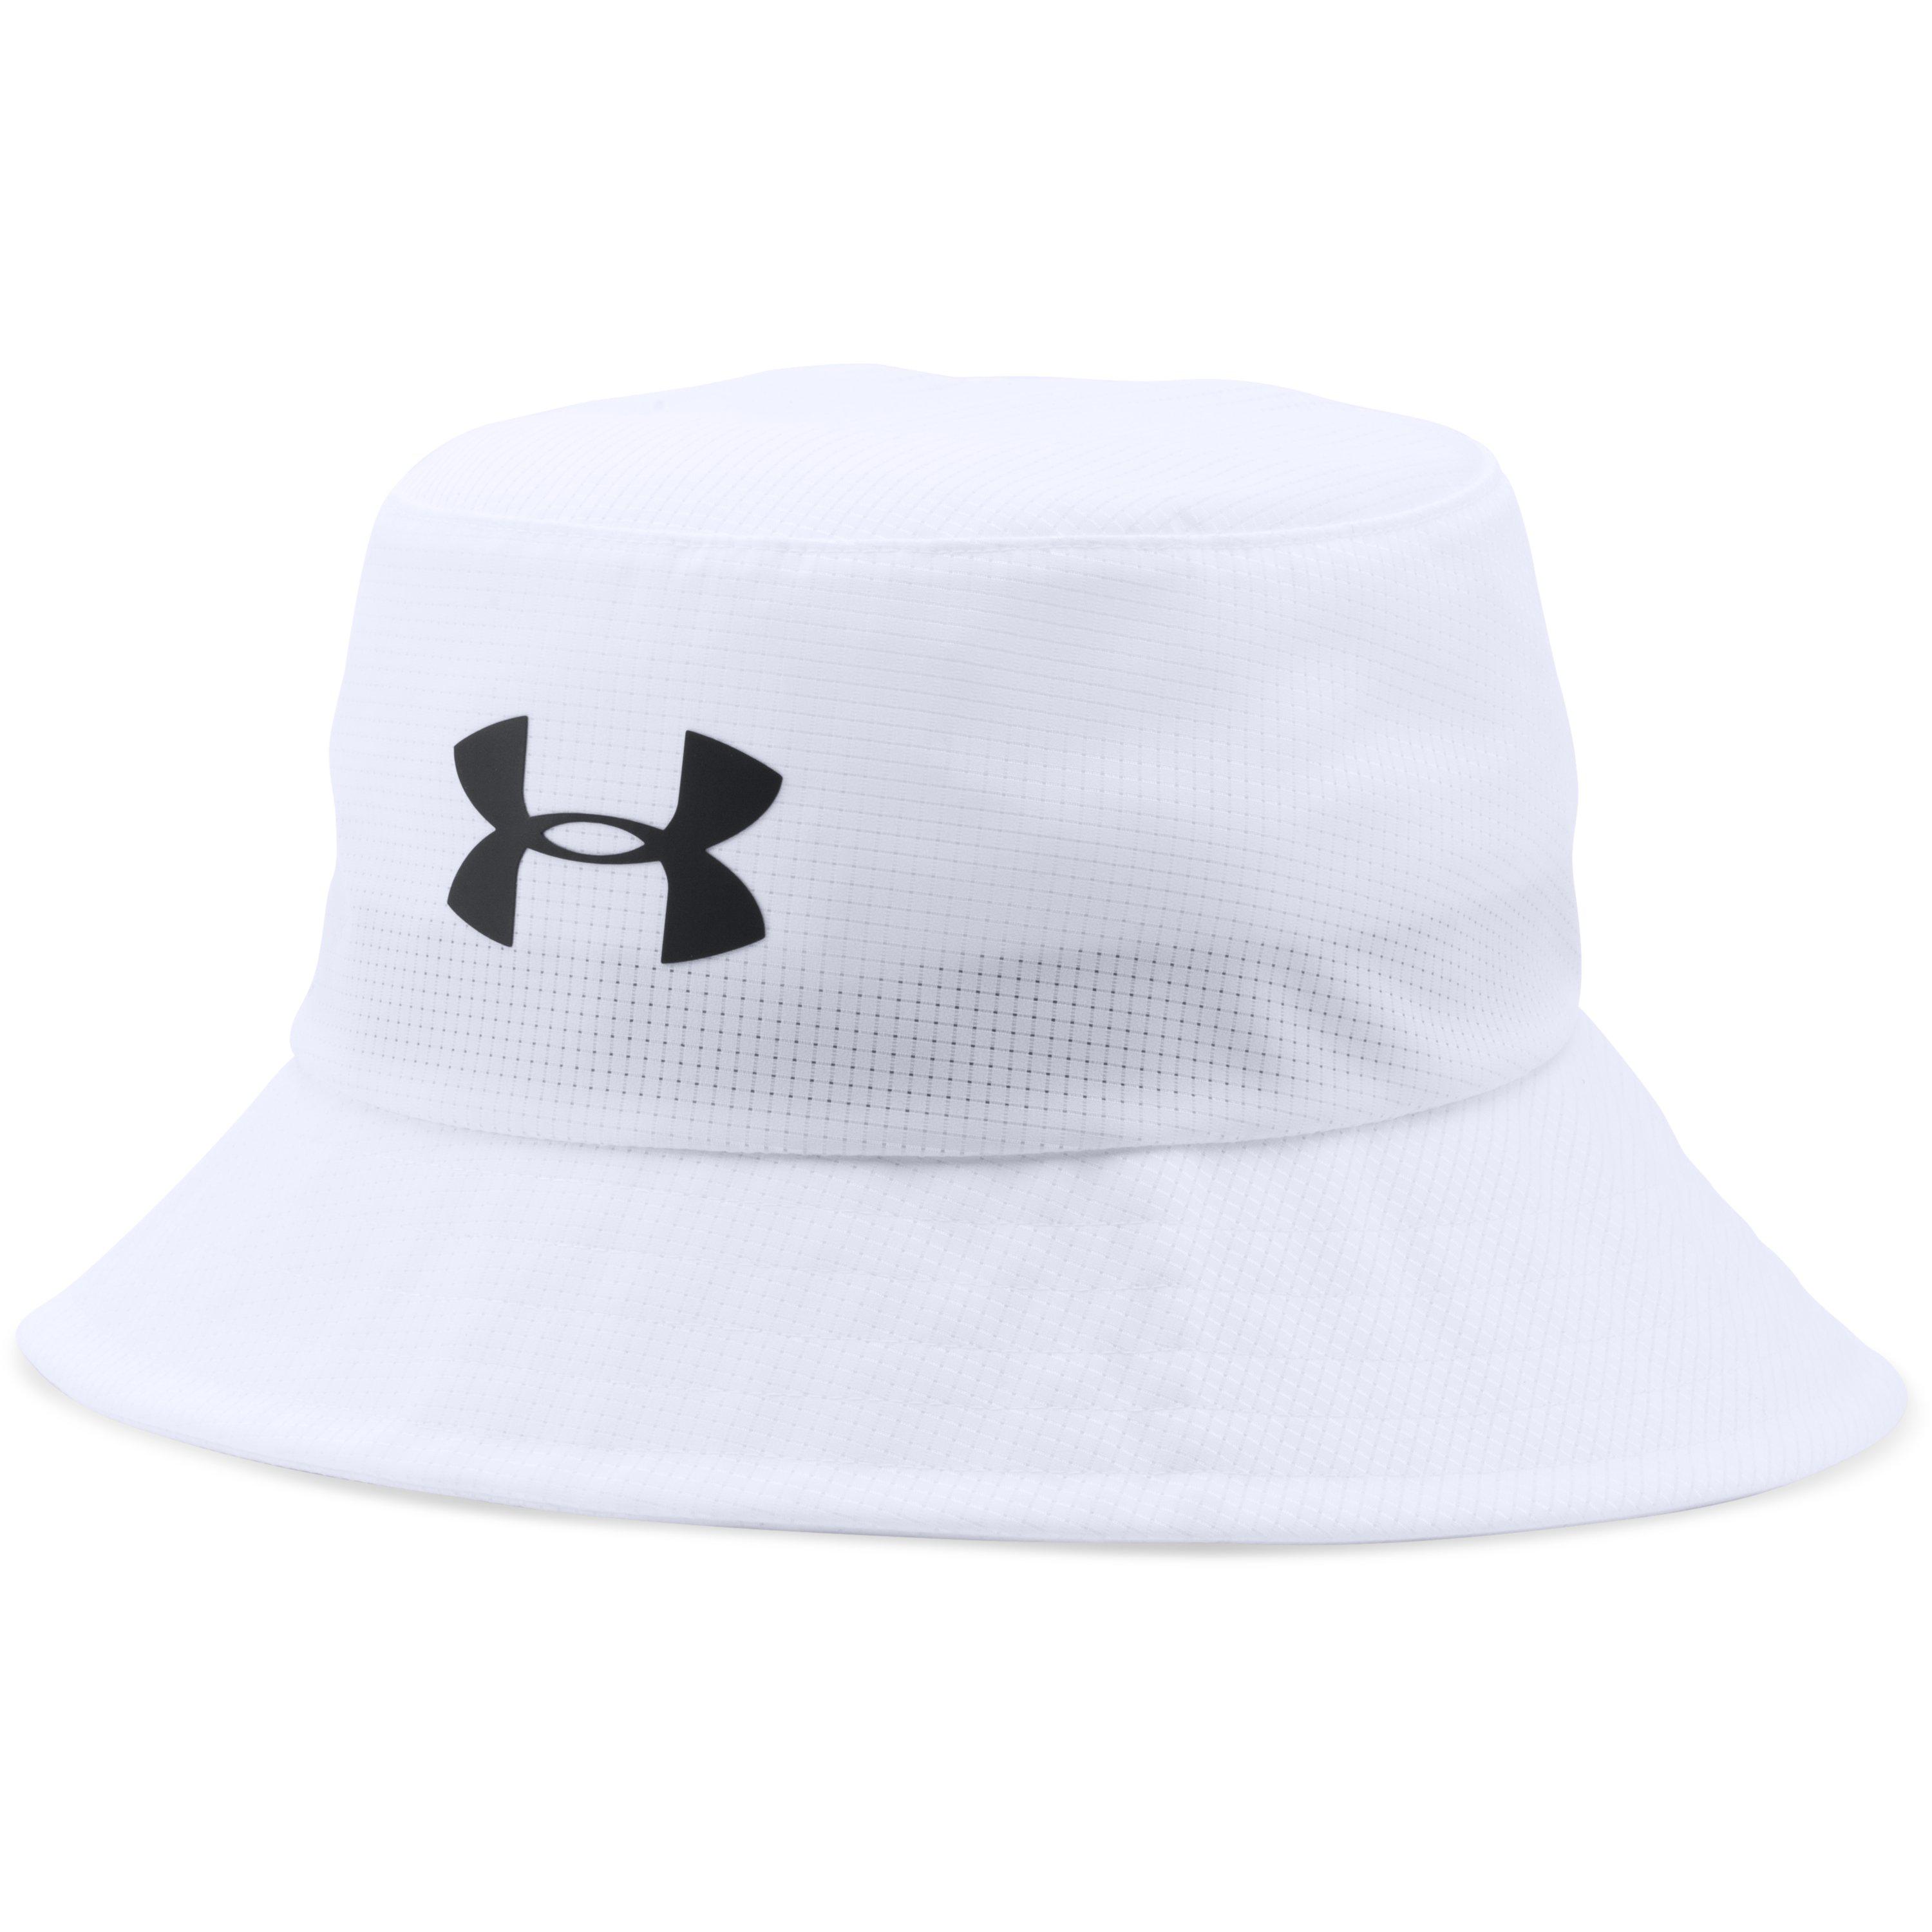 Under Armour Men's Golf37 Hat - White, M/L